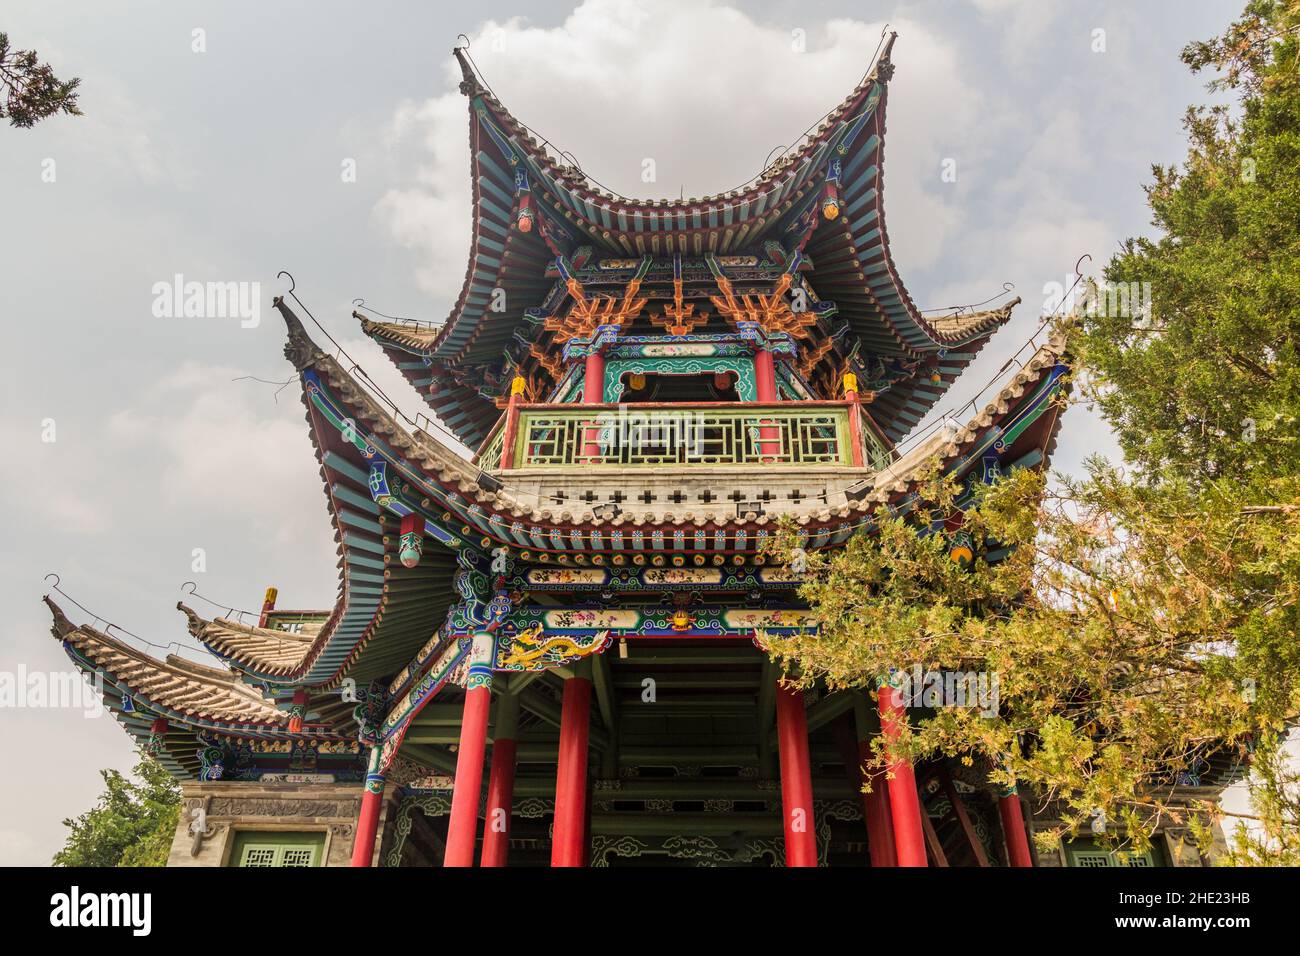 Pavilion on White Pagoda Mountain in Lanzhou, Gansu Province, China Stock Photo